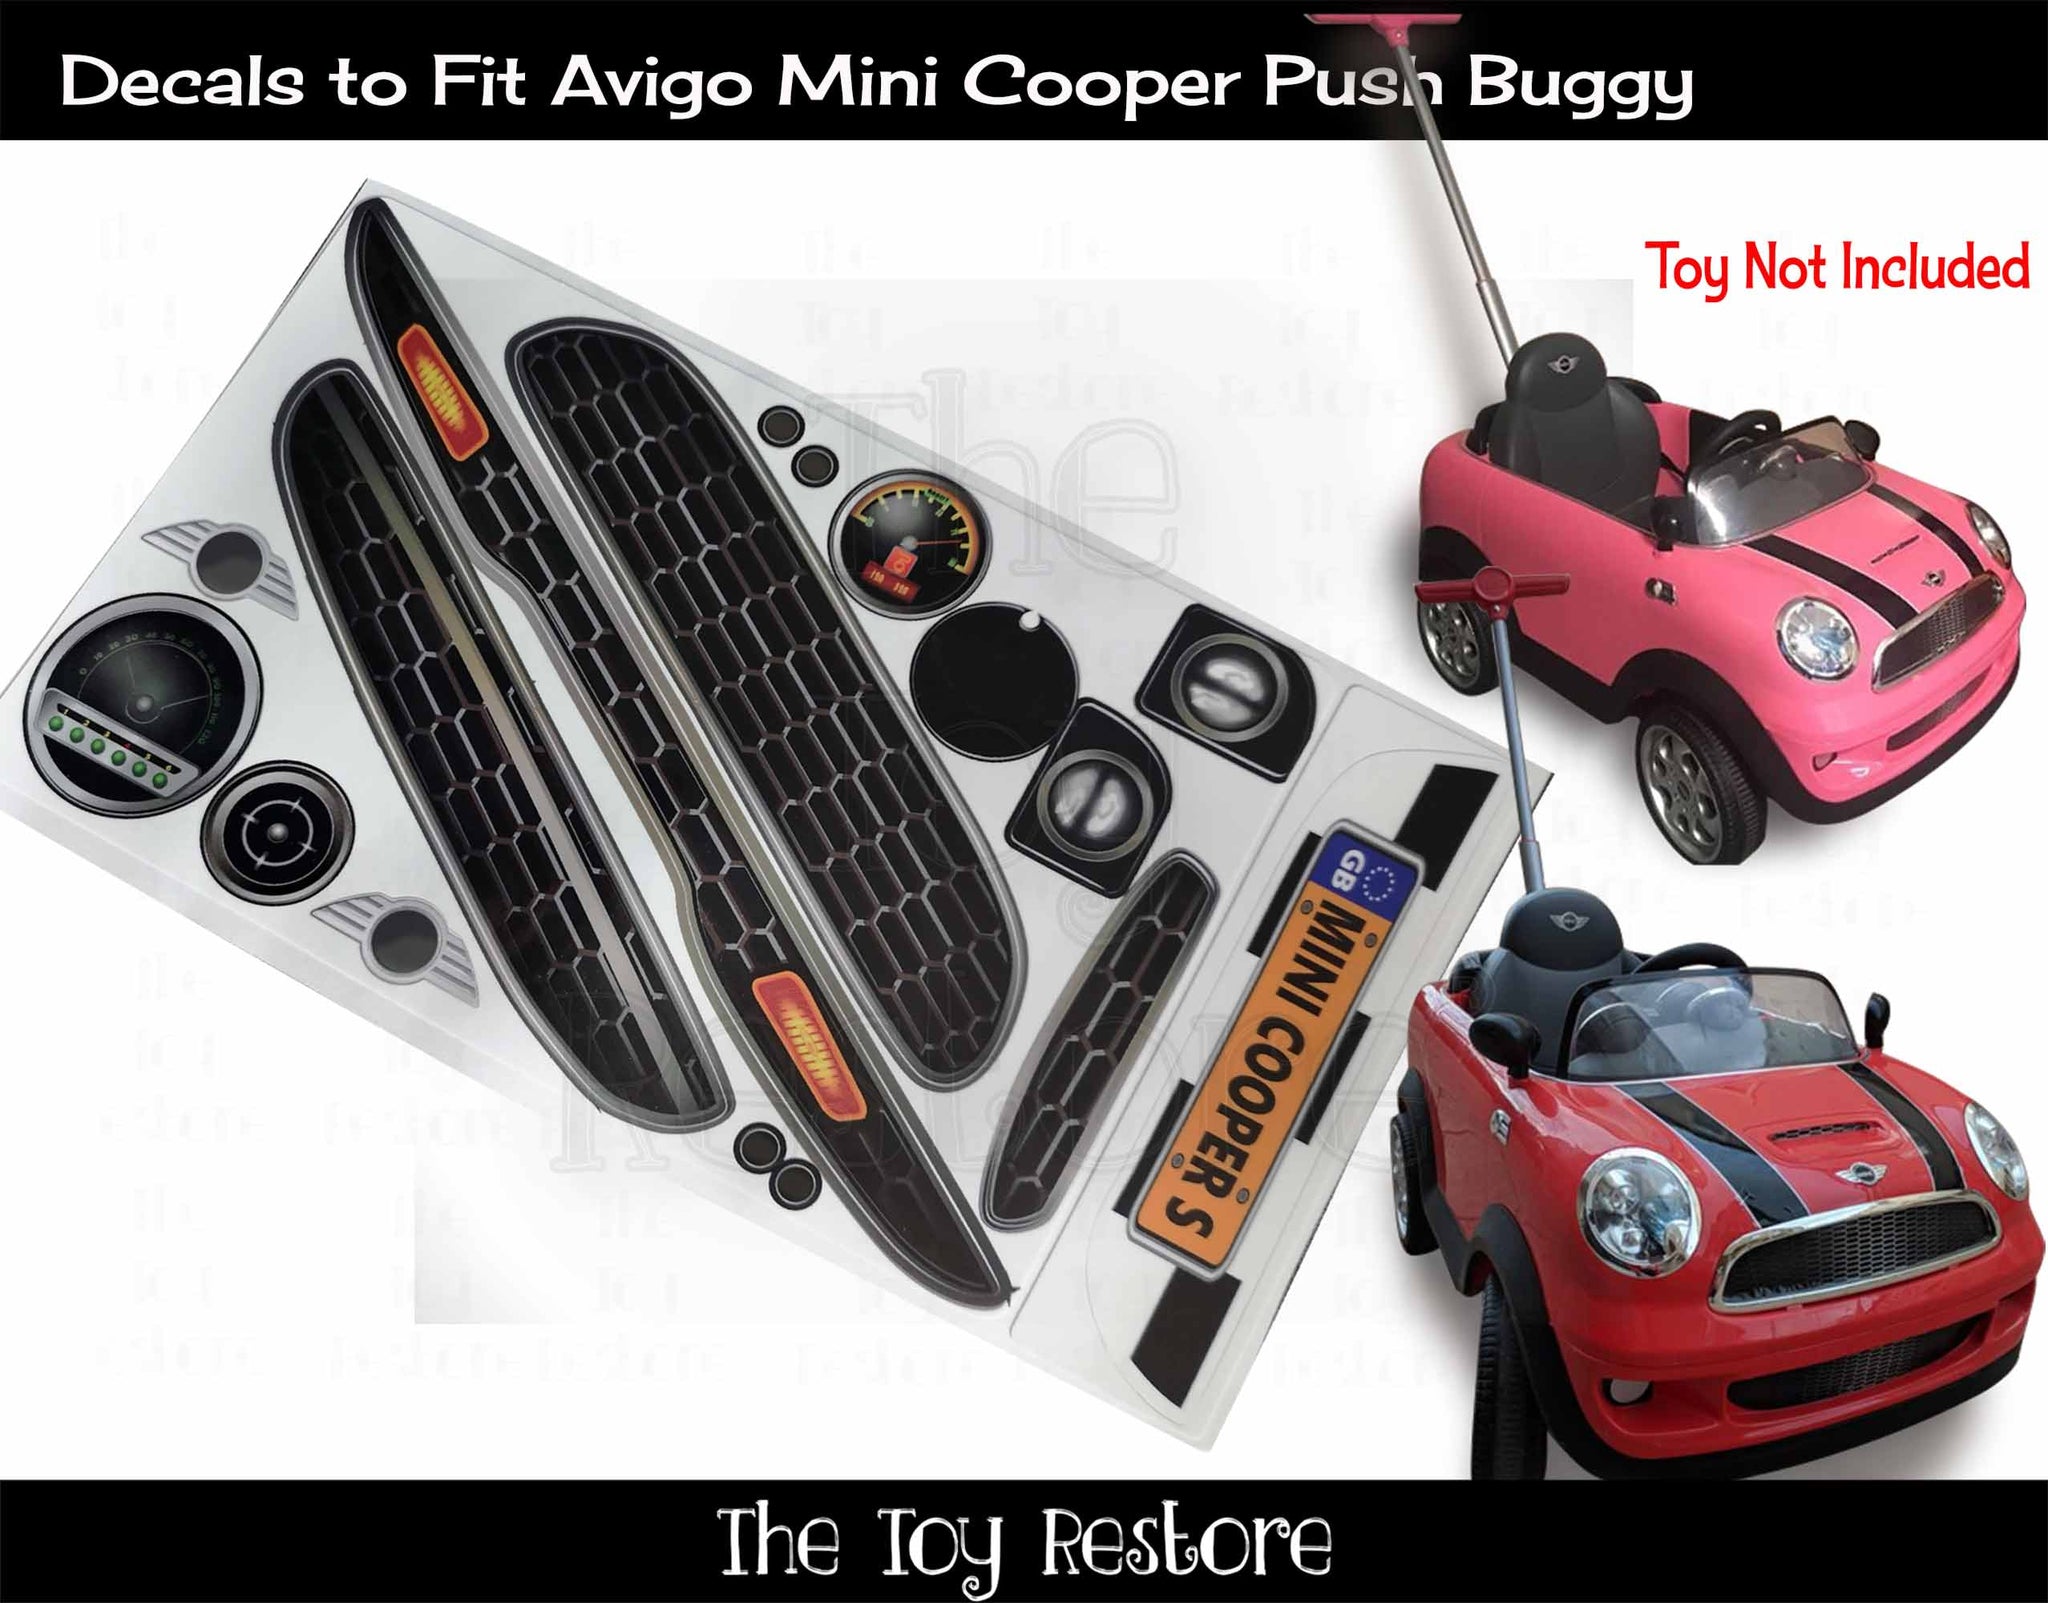 Kit déco capot Mini cooper - PRSmotorsport Stickers auto –